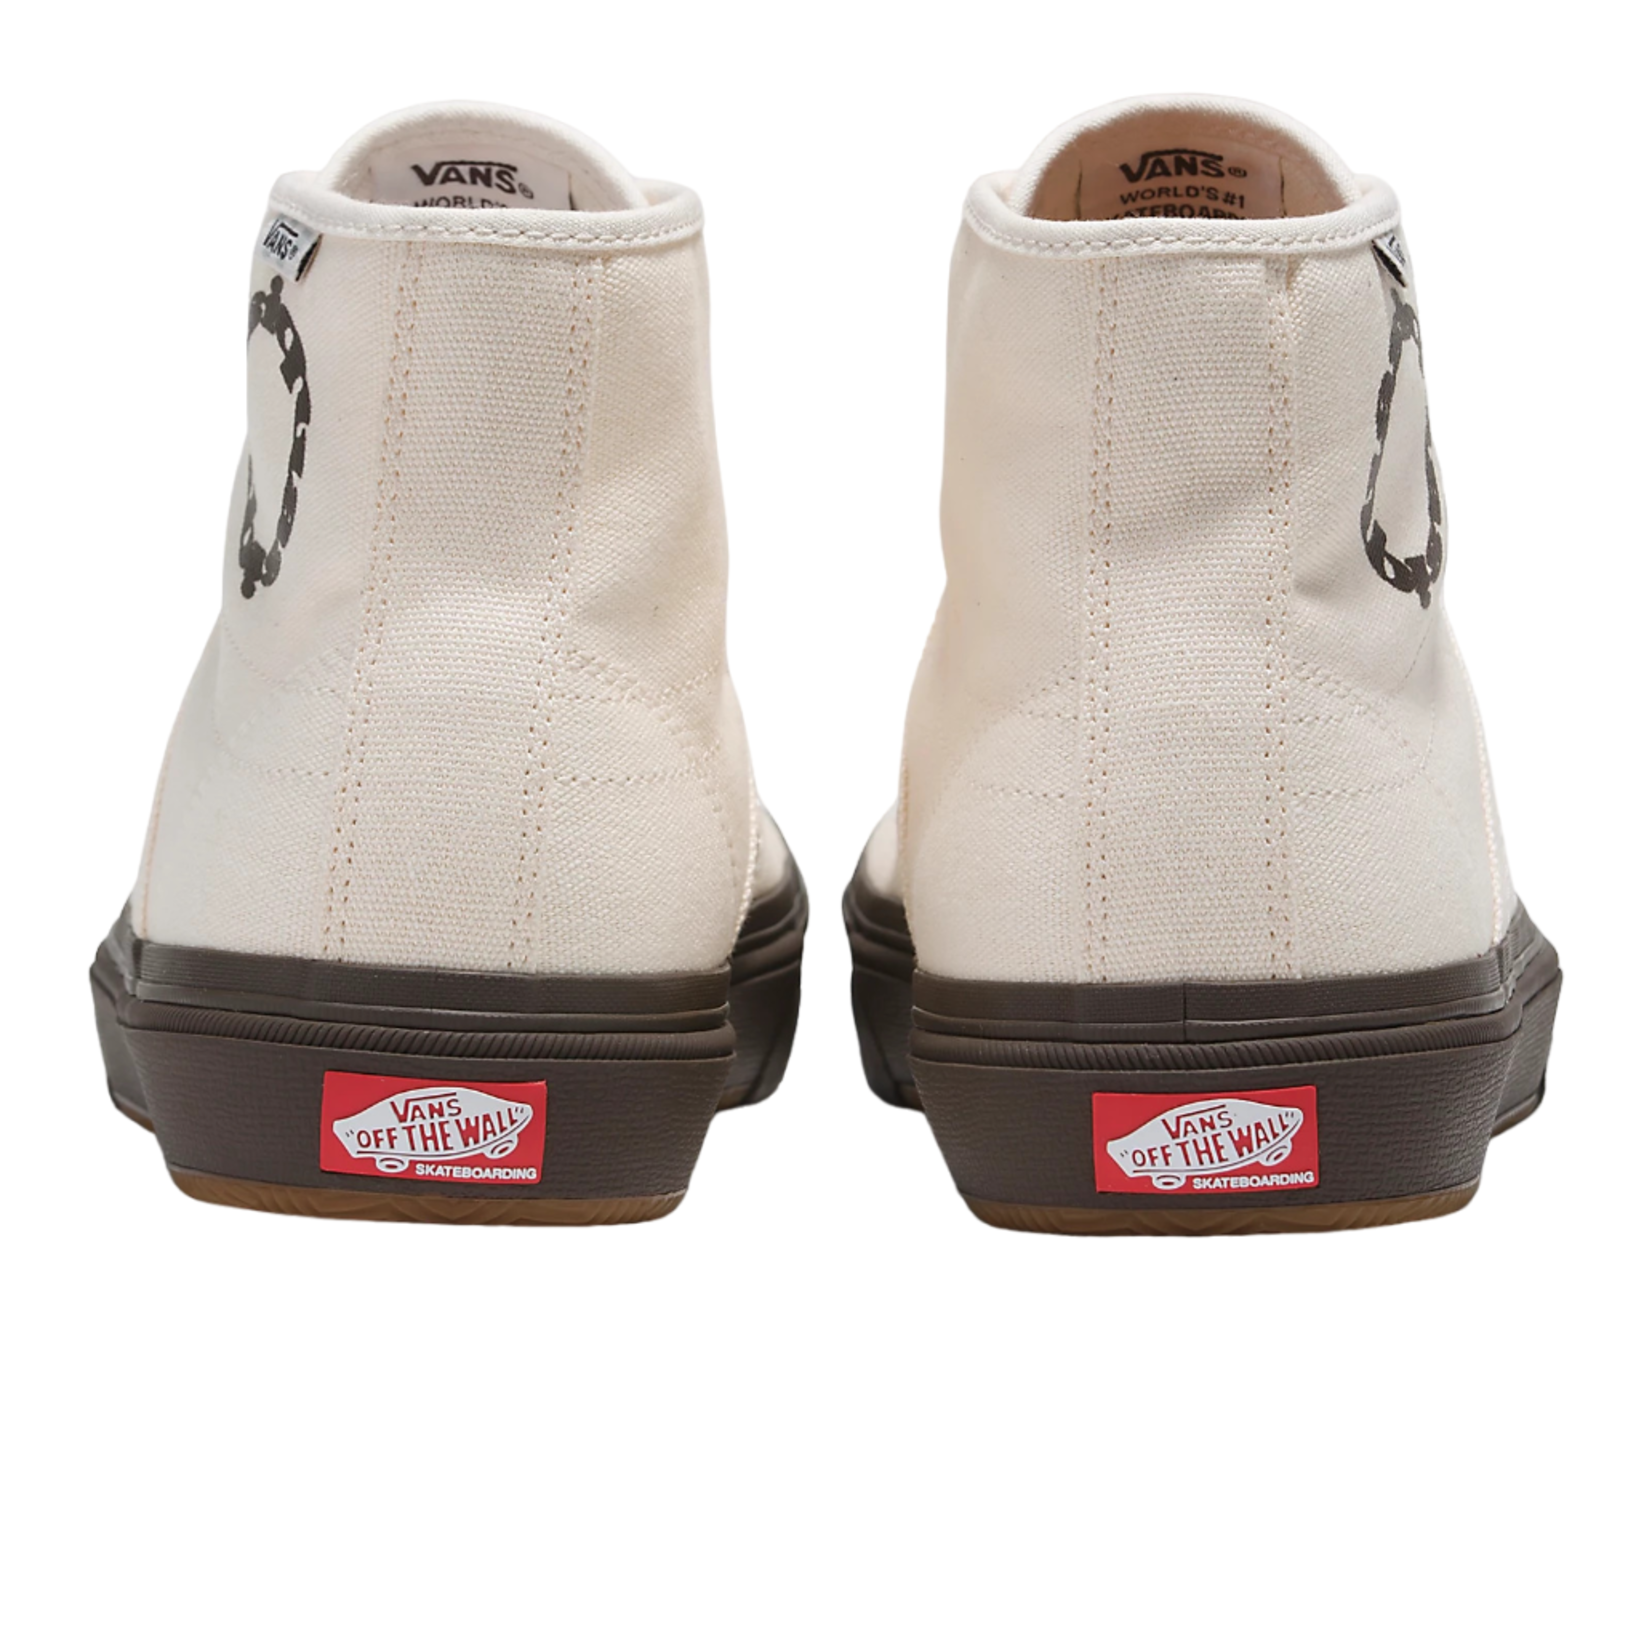 Vans Vans Crockett High Decon Shoe - White x Quasi